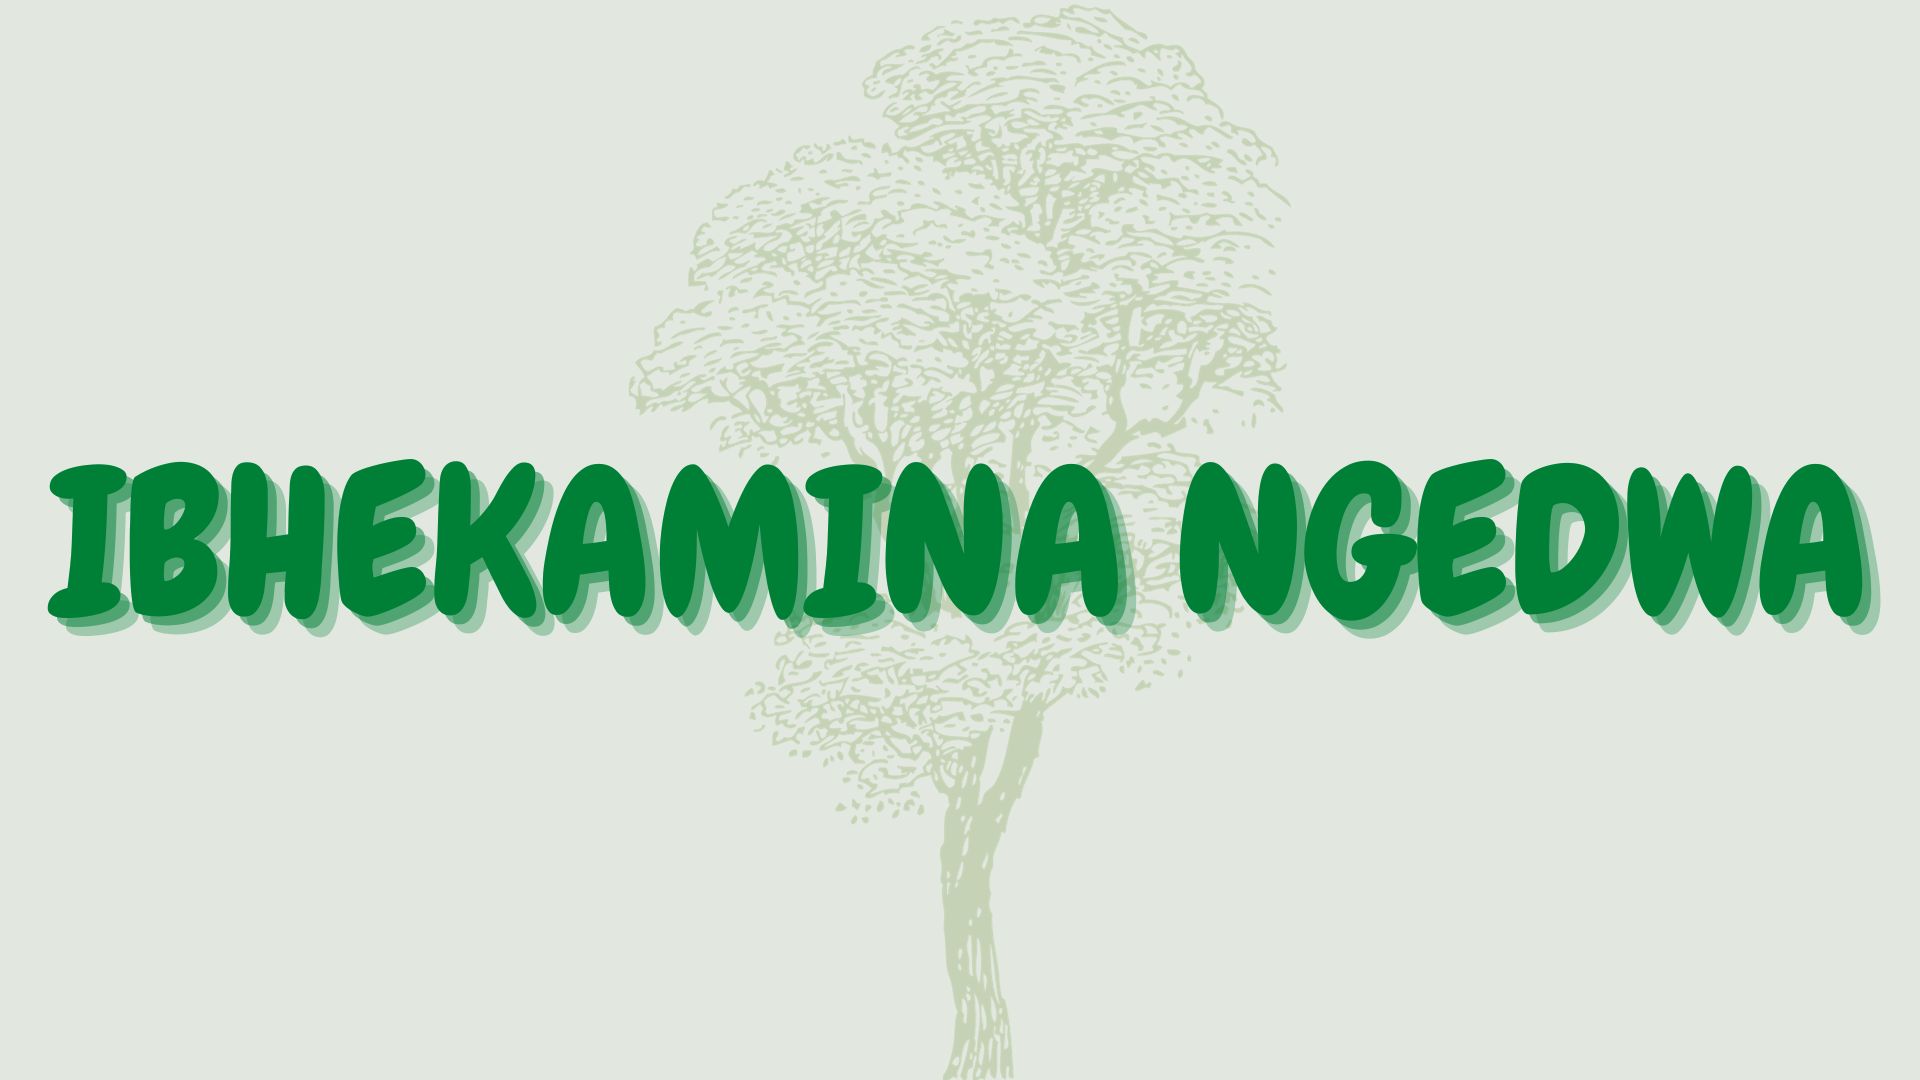 You are currently viewing iBhekamina ngedwa